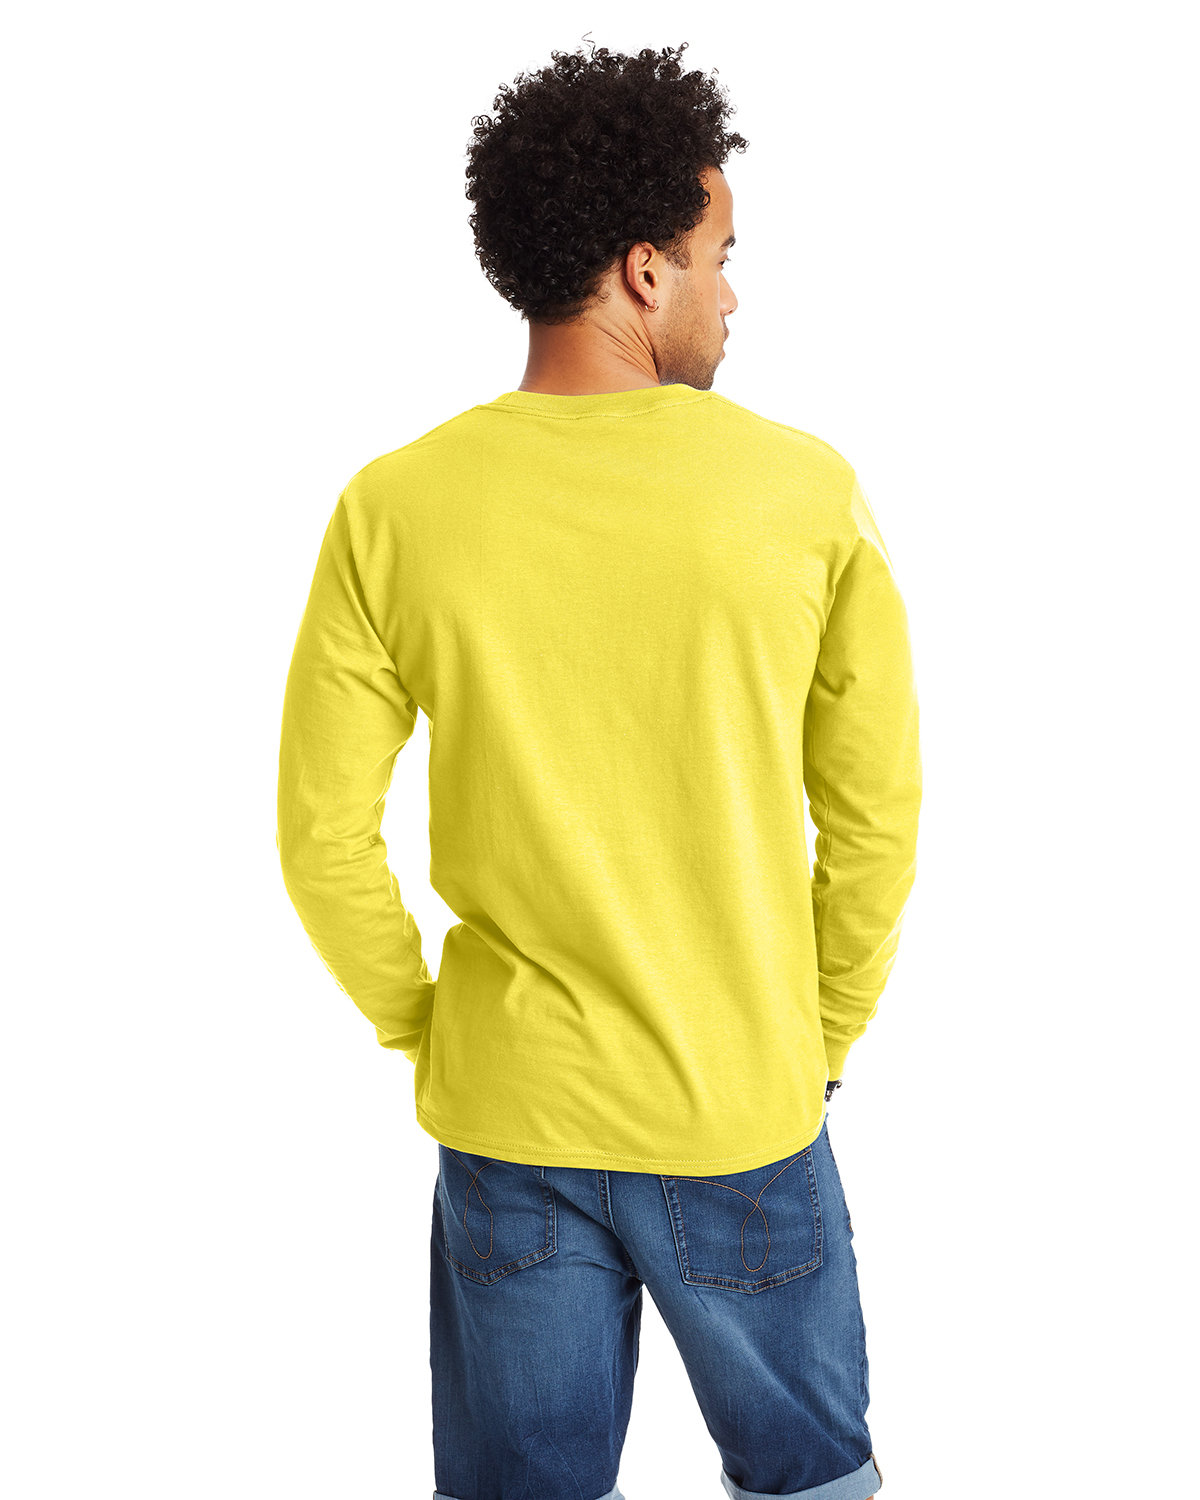 Hanes Men's 100% Cotton Long Sleeve Beefy-T® L/S Tee Shirt S-3XL 5186 ...